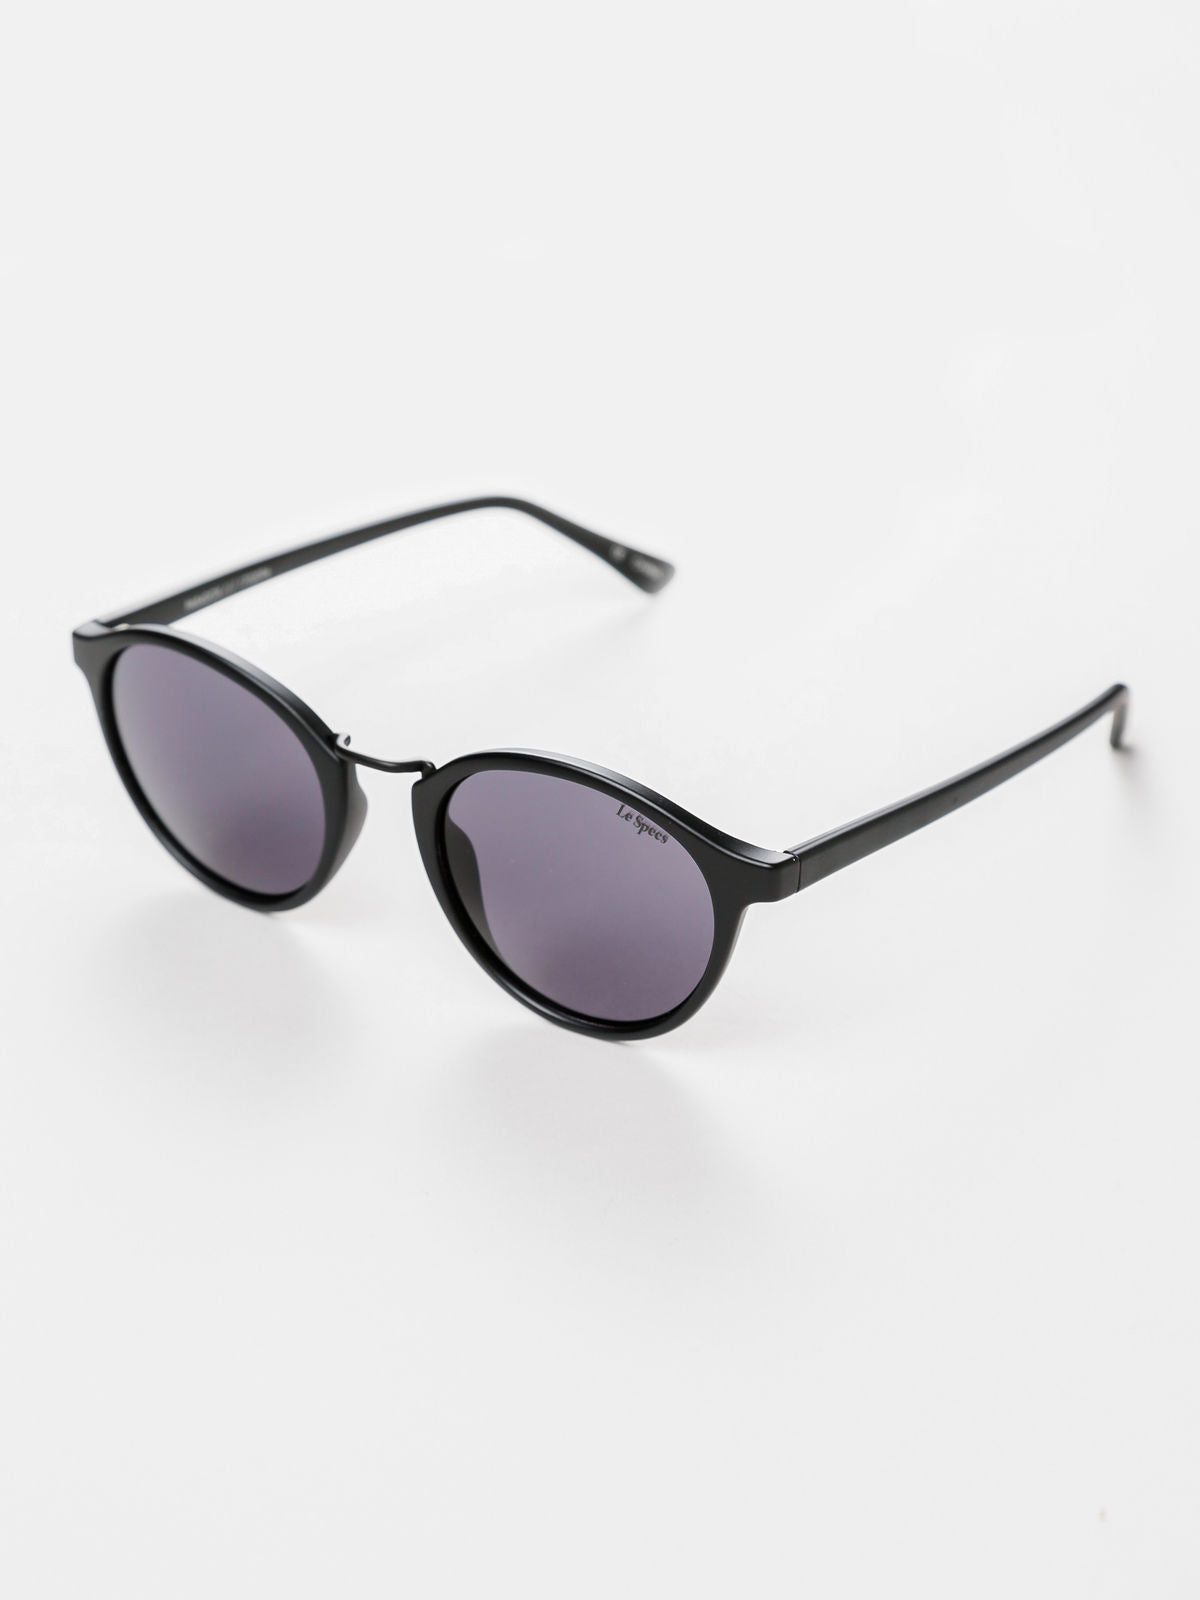 Paradox Sunglasses in Matte Black